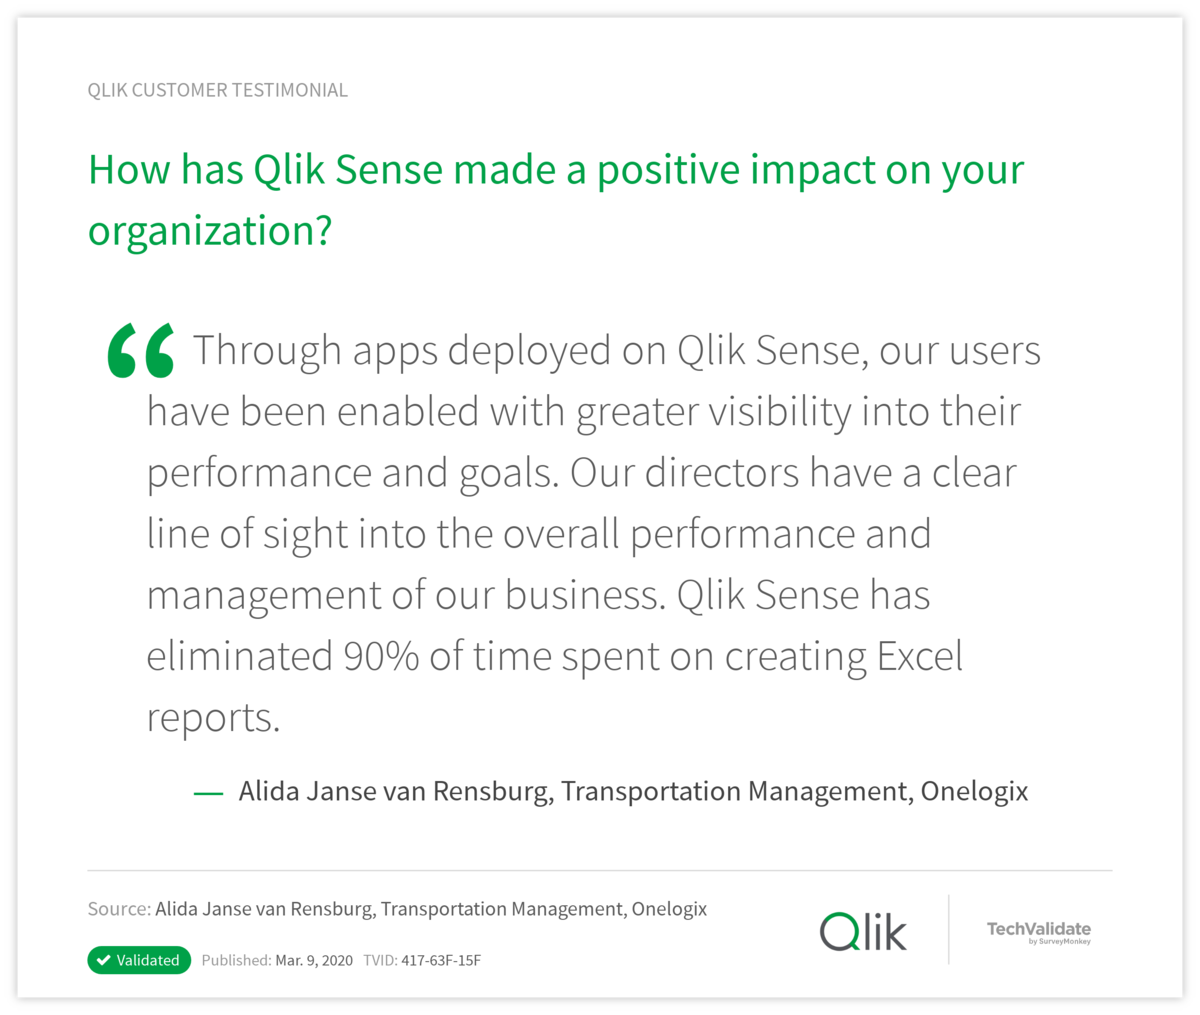 How has Qlik Sense made a positive impact on your organization?